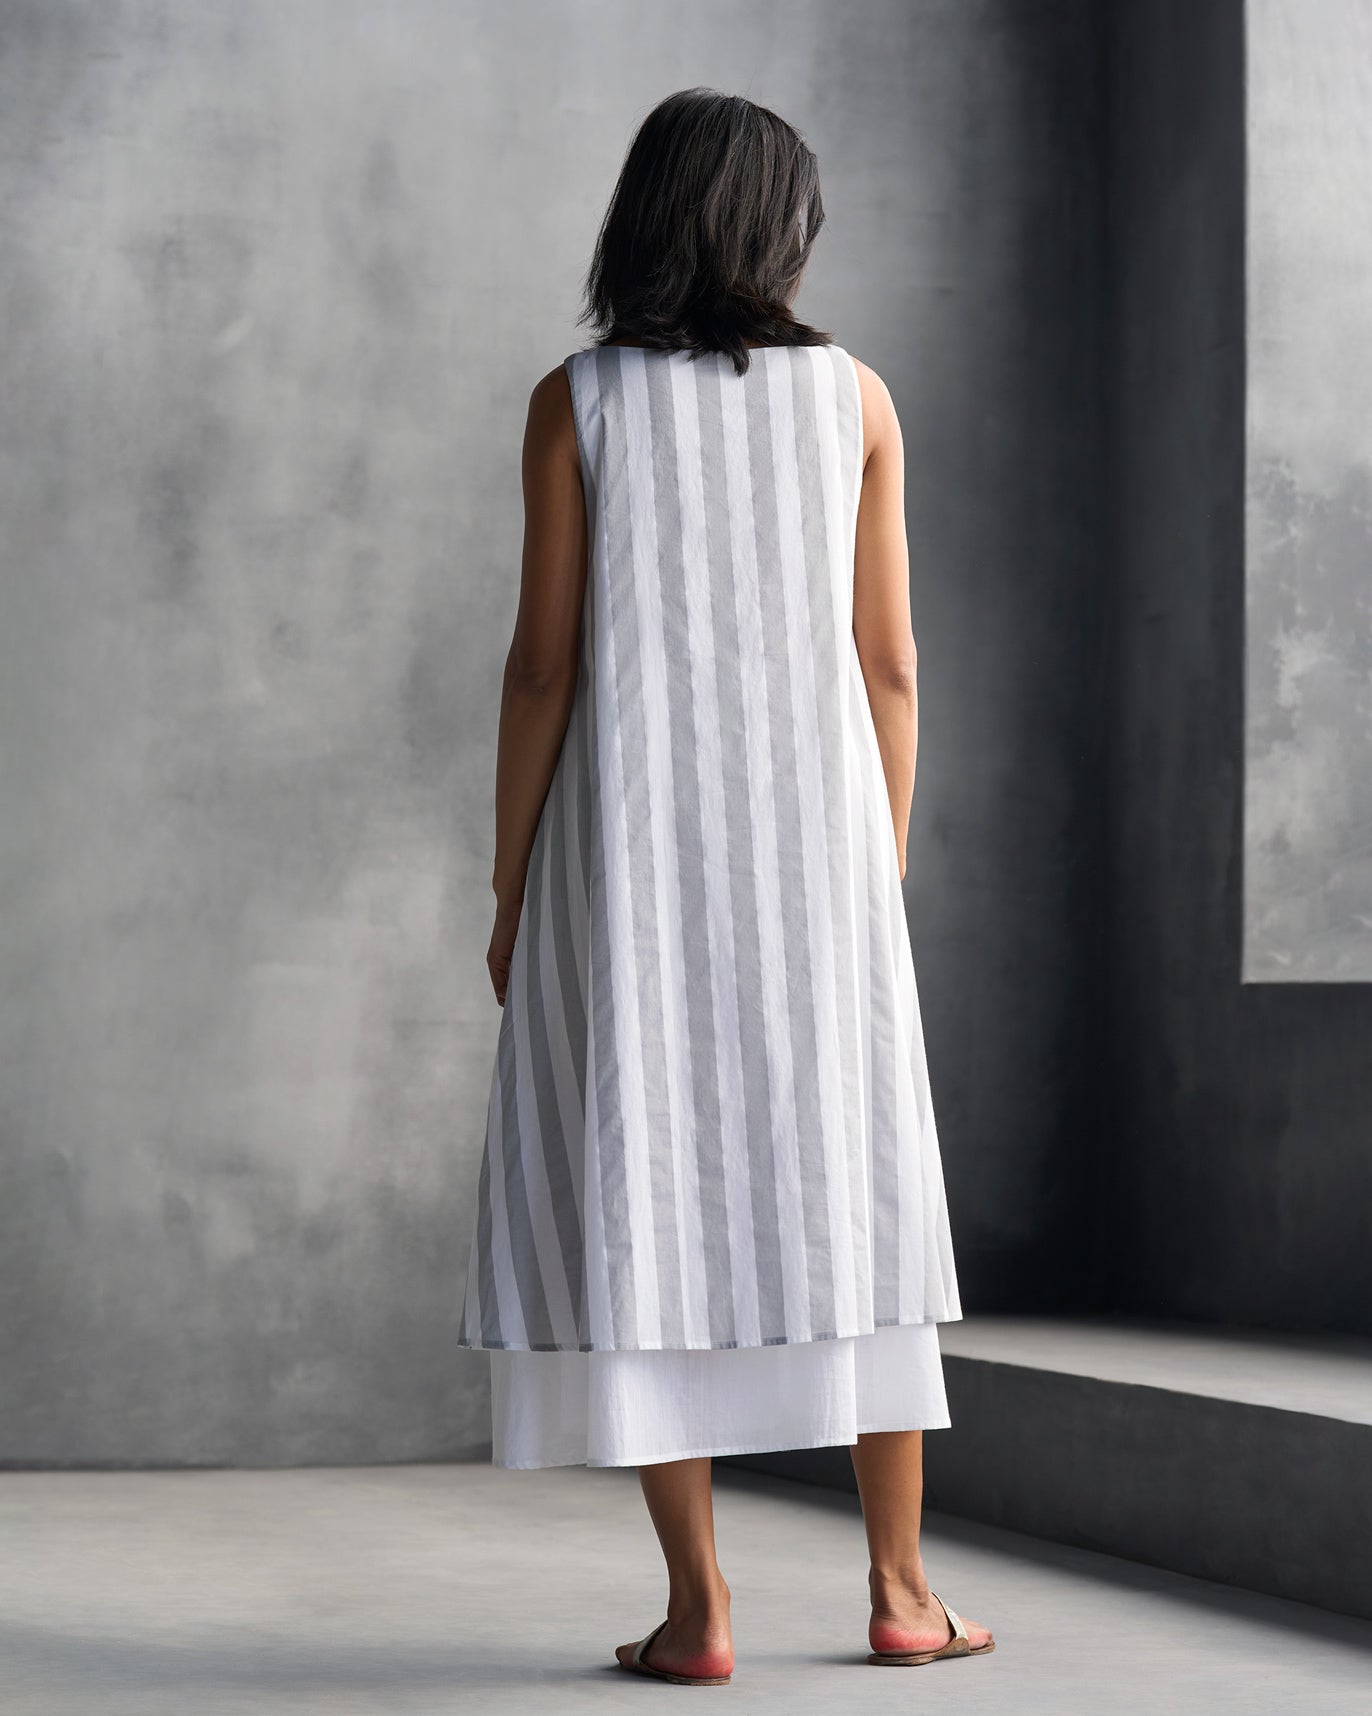 Double Layer Dress - White & Grey